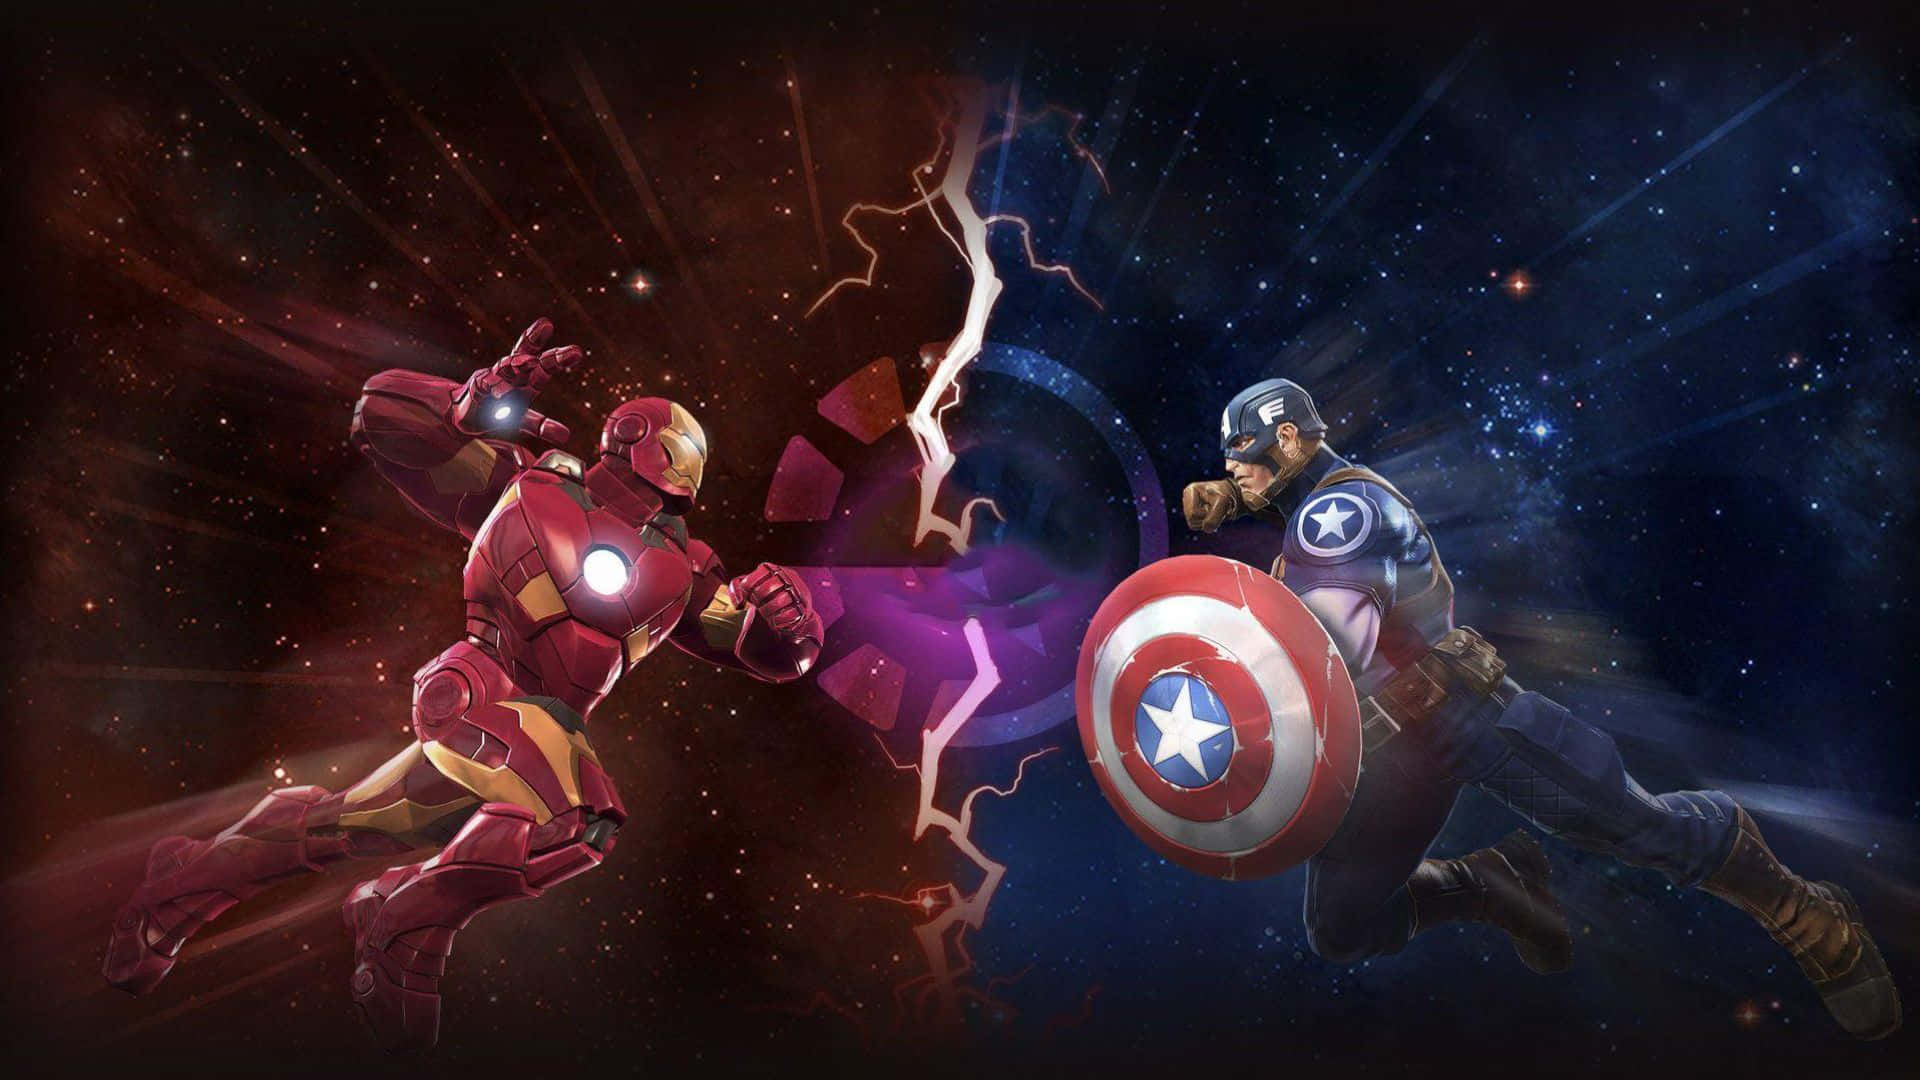 Iron Man vs Captain America battle for justice Wallpaper